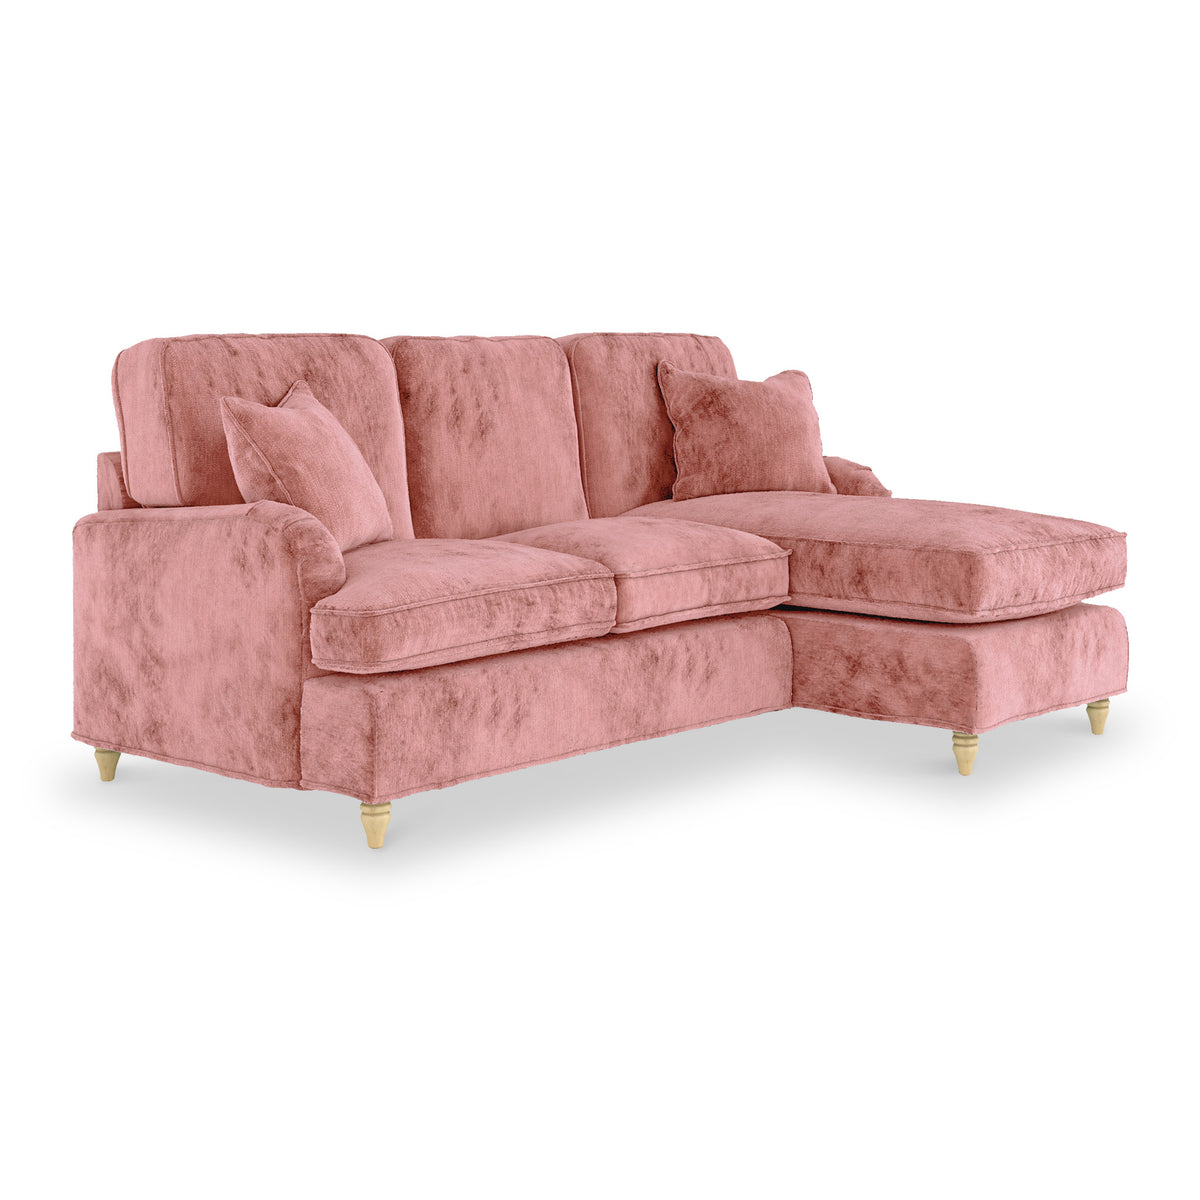 Arthur Plum Pink RH Chaise Sofa from Roseland Furniture